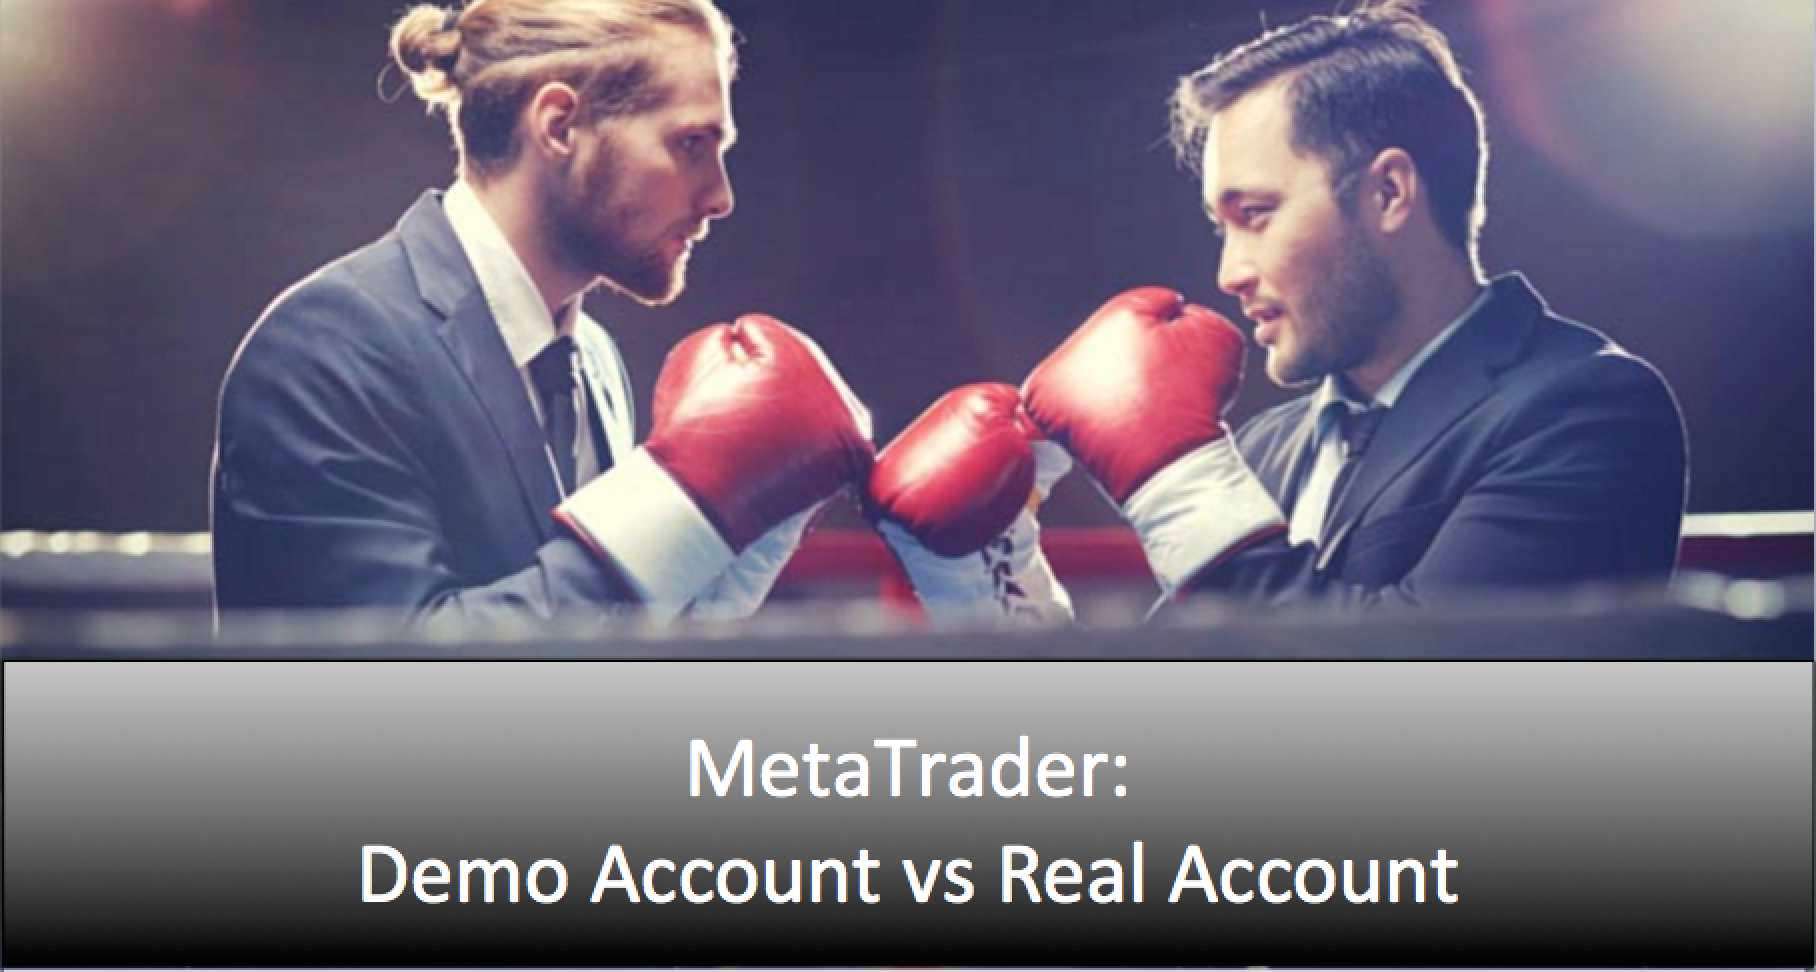 MetaTrader demo vs real accounts